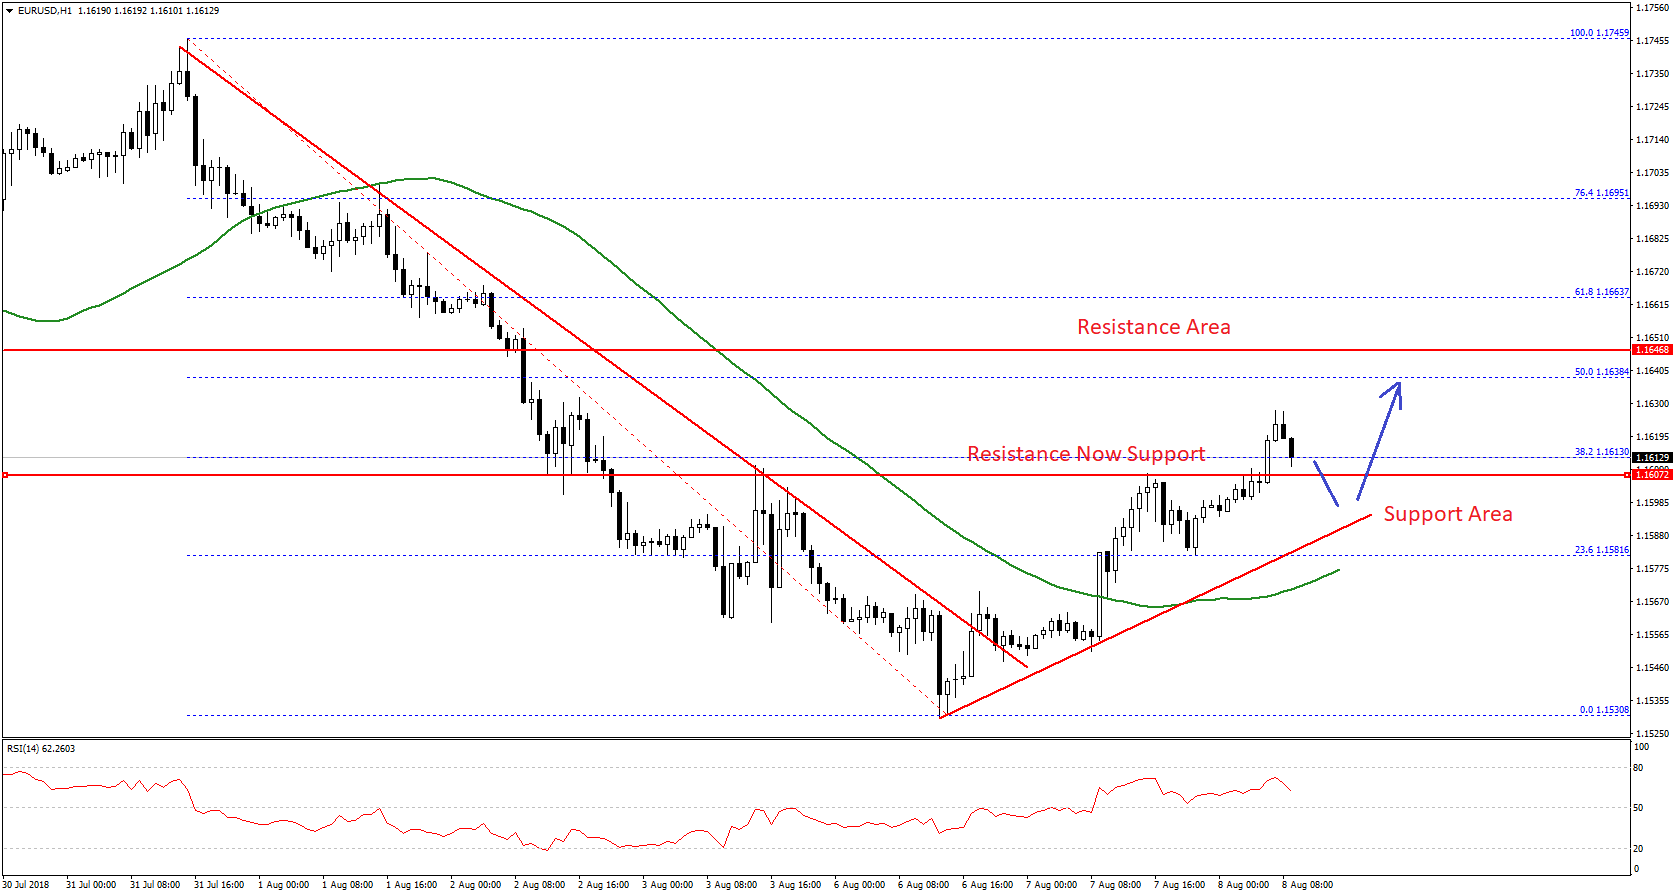 EUR/USD Technical Analysis Euro Dollar Chart